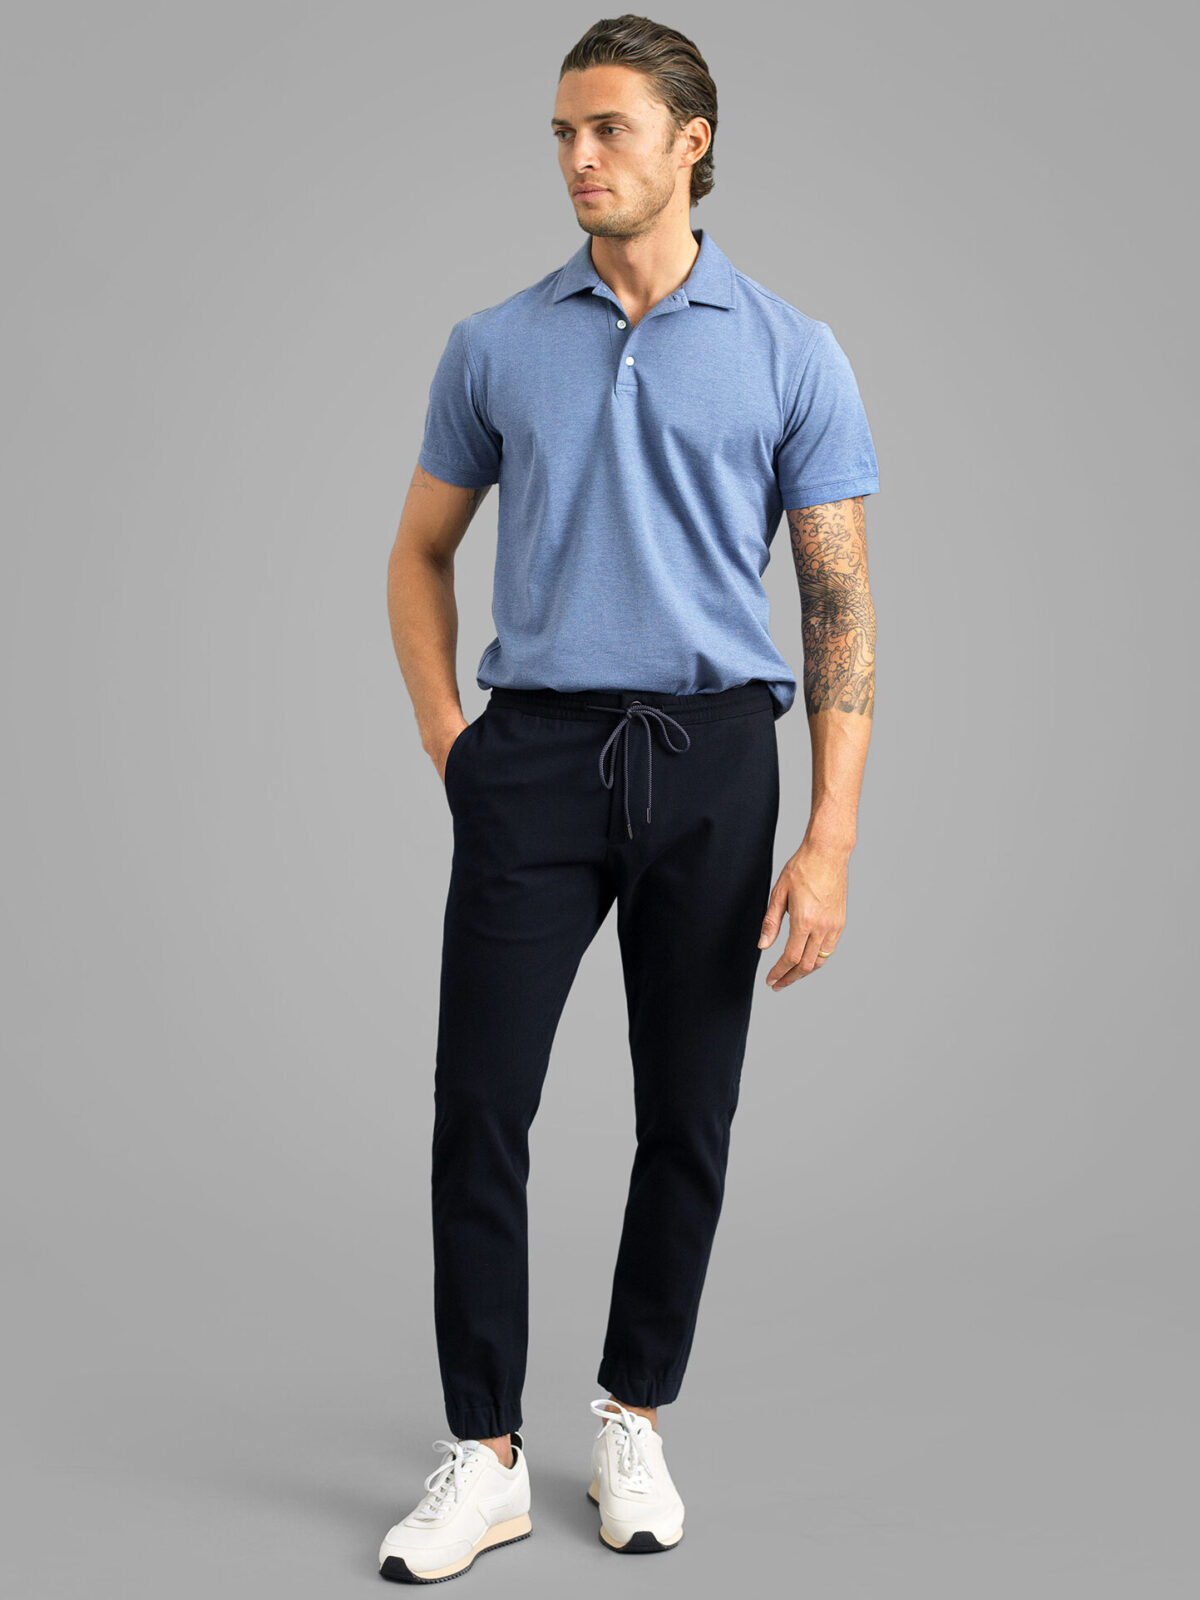 UNIQLO cotton blend jogger pants (navy blue), Women's Fashion